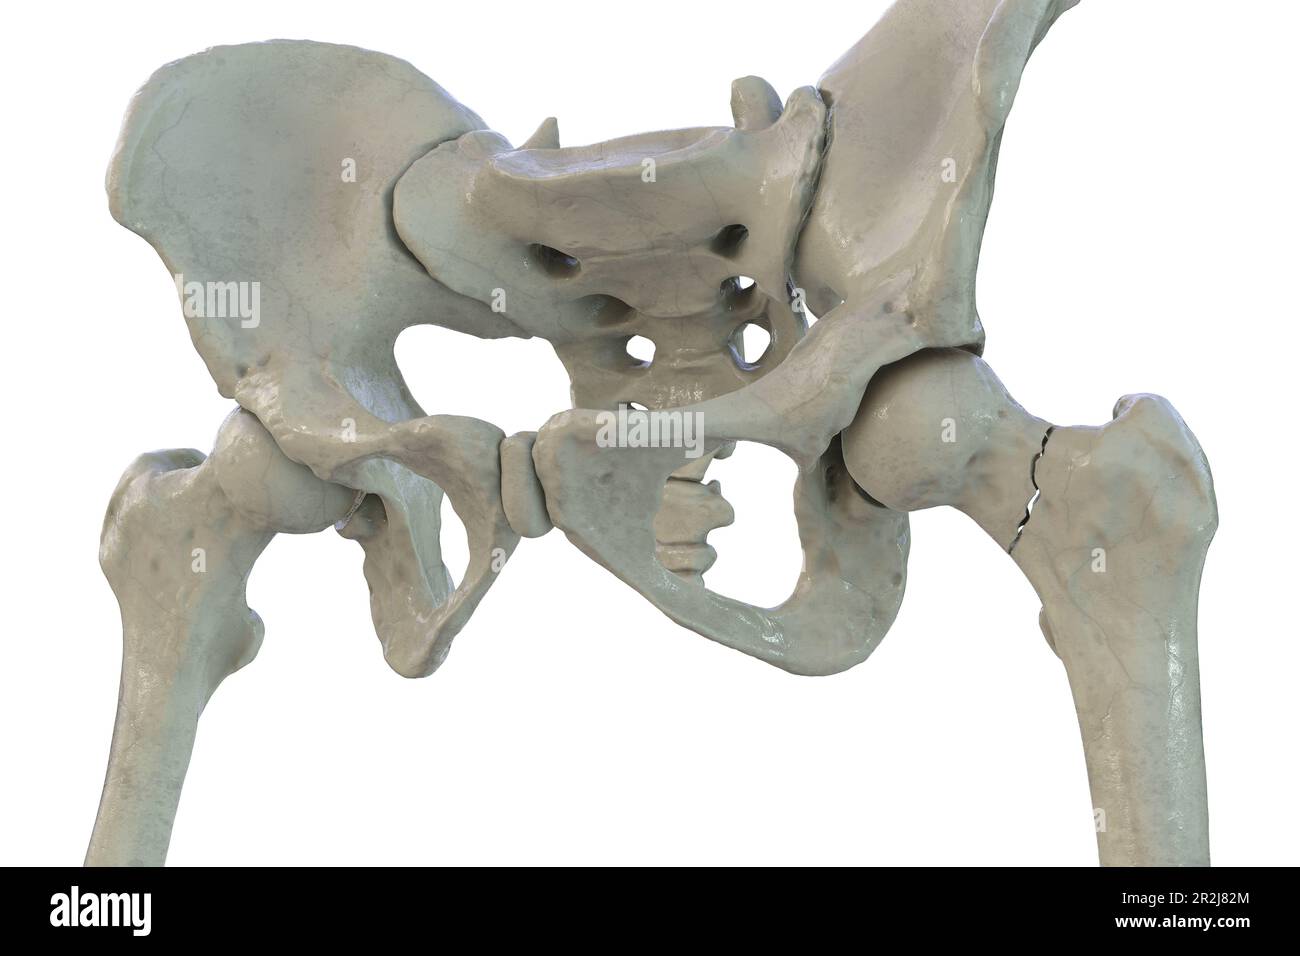 Fracture of the femur neck, illustration Stock Photo